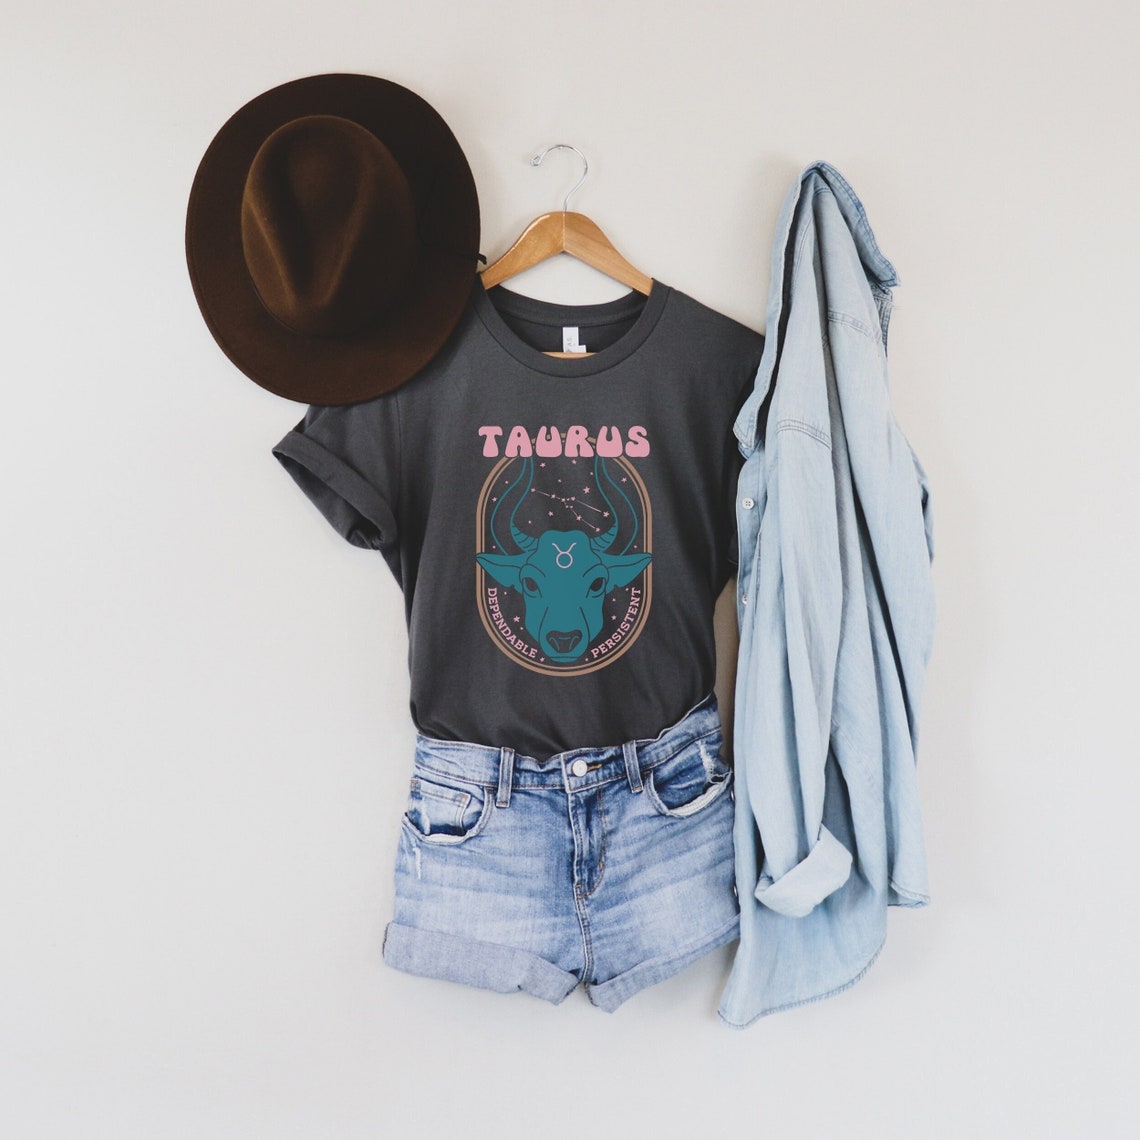 Taurus Shirt, Zodiac 70s Tshirt, Taurus Astrology Tee